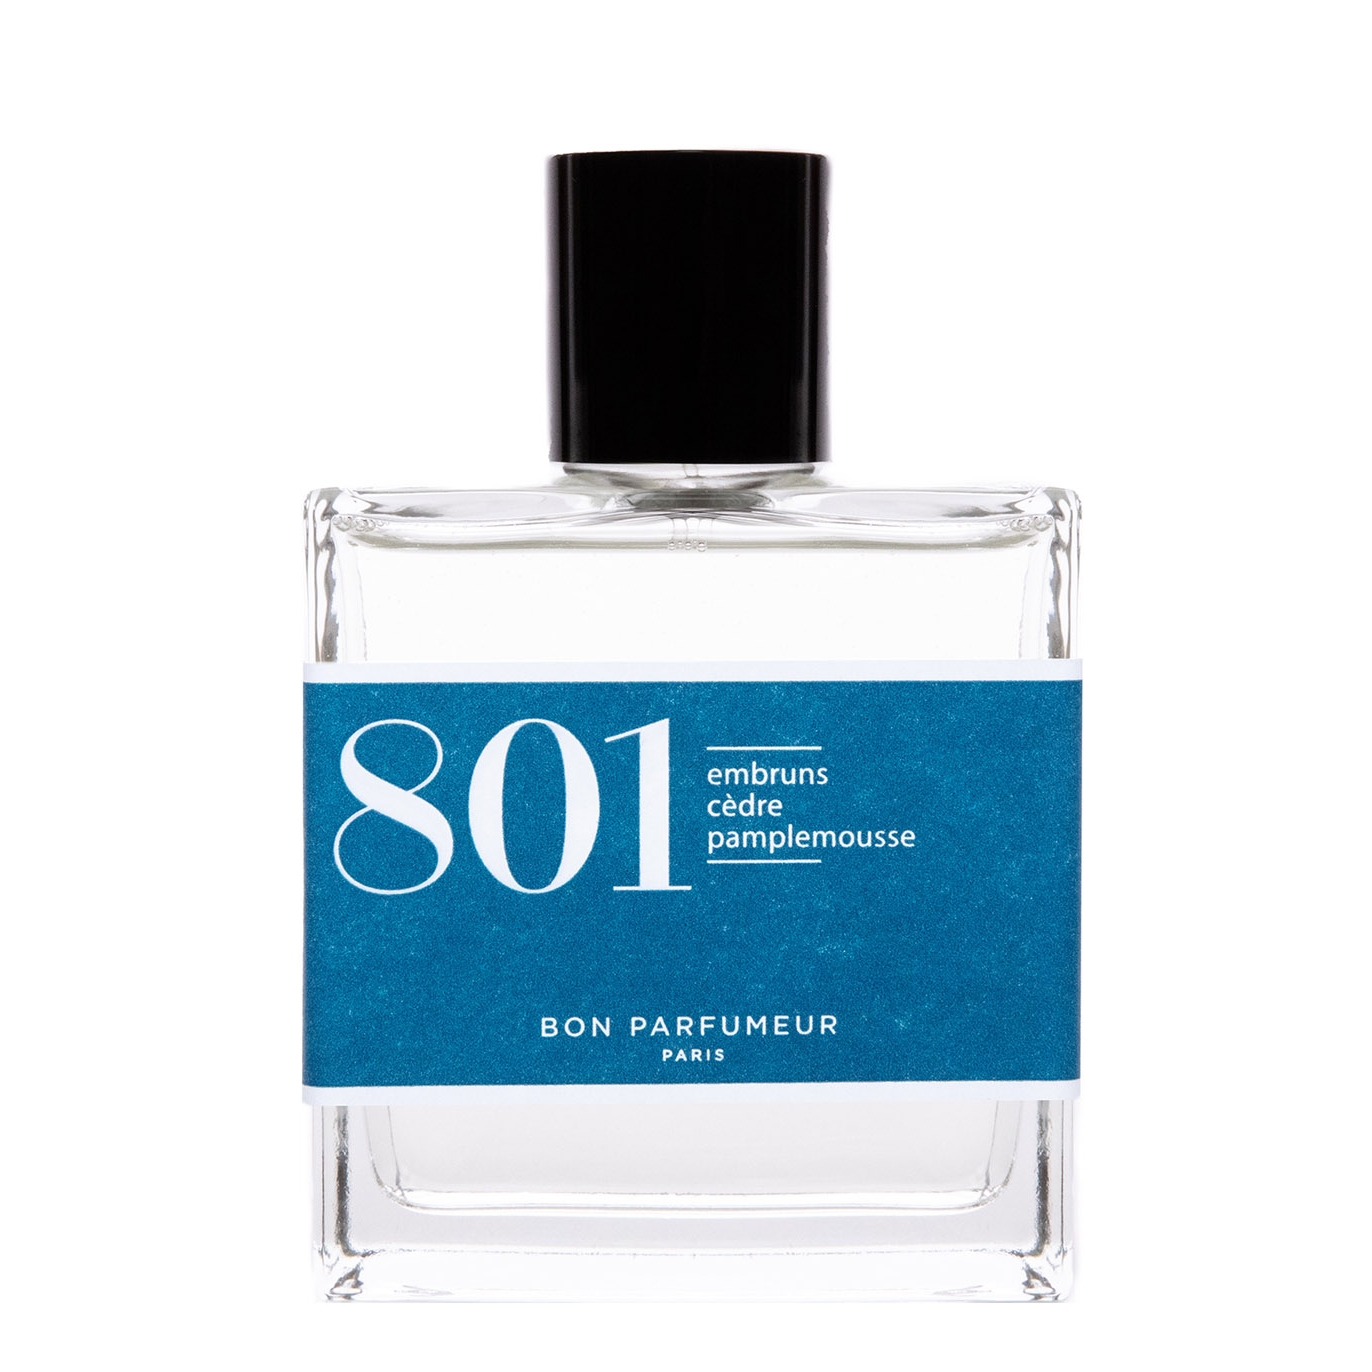 Bon Parfumeur 801 Sea Spray, Cedar, Grapefruit Eau De Parfum 100ml